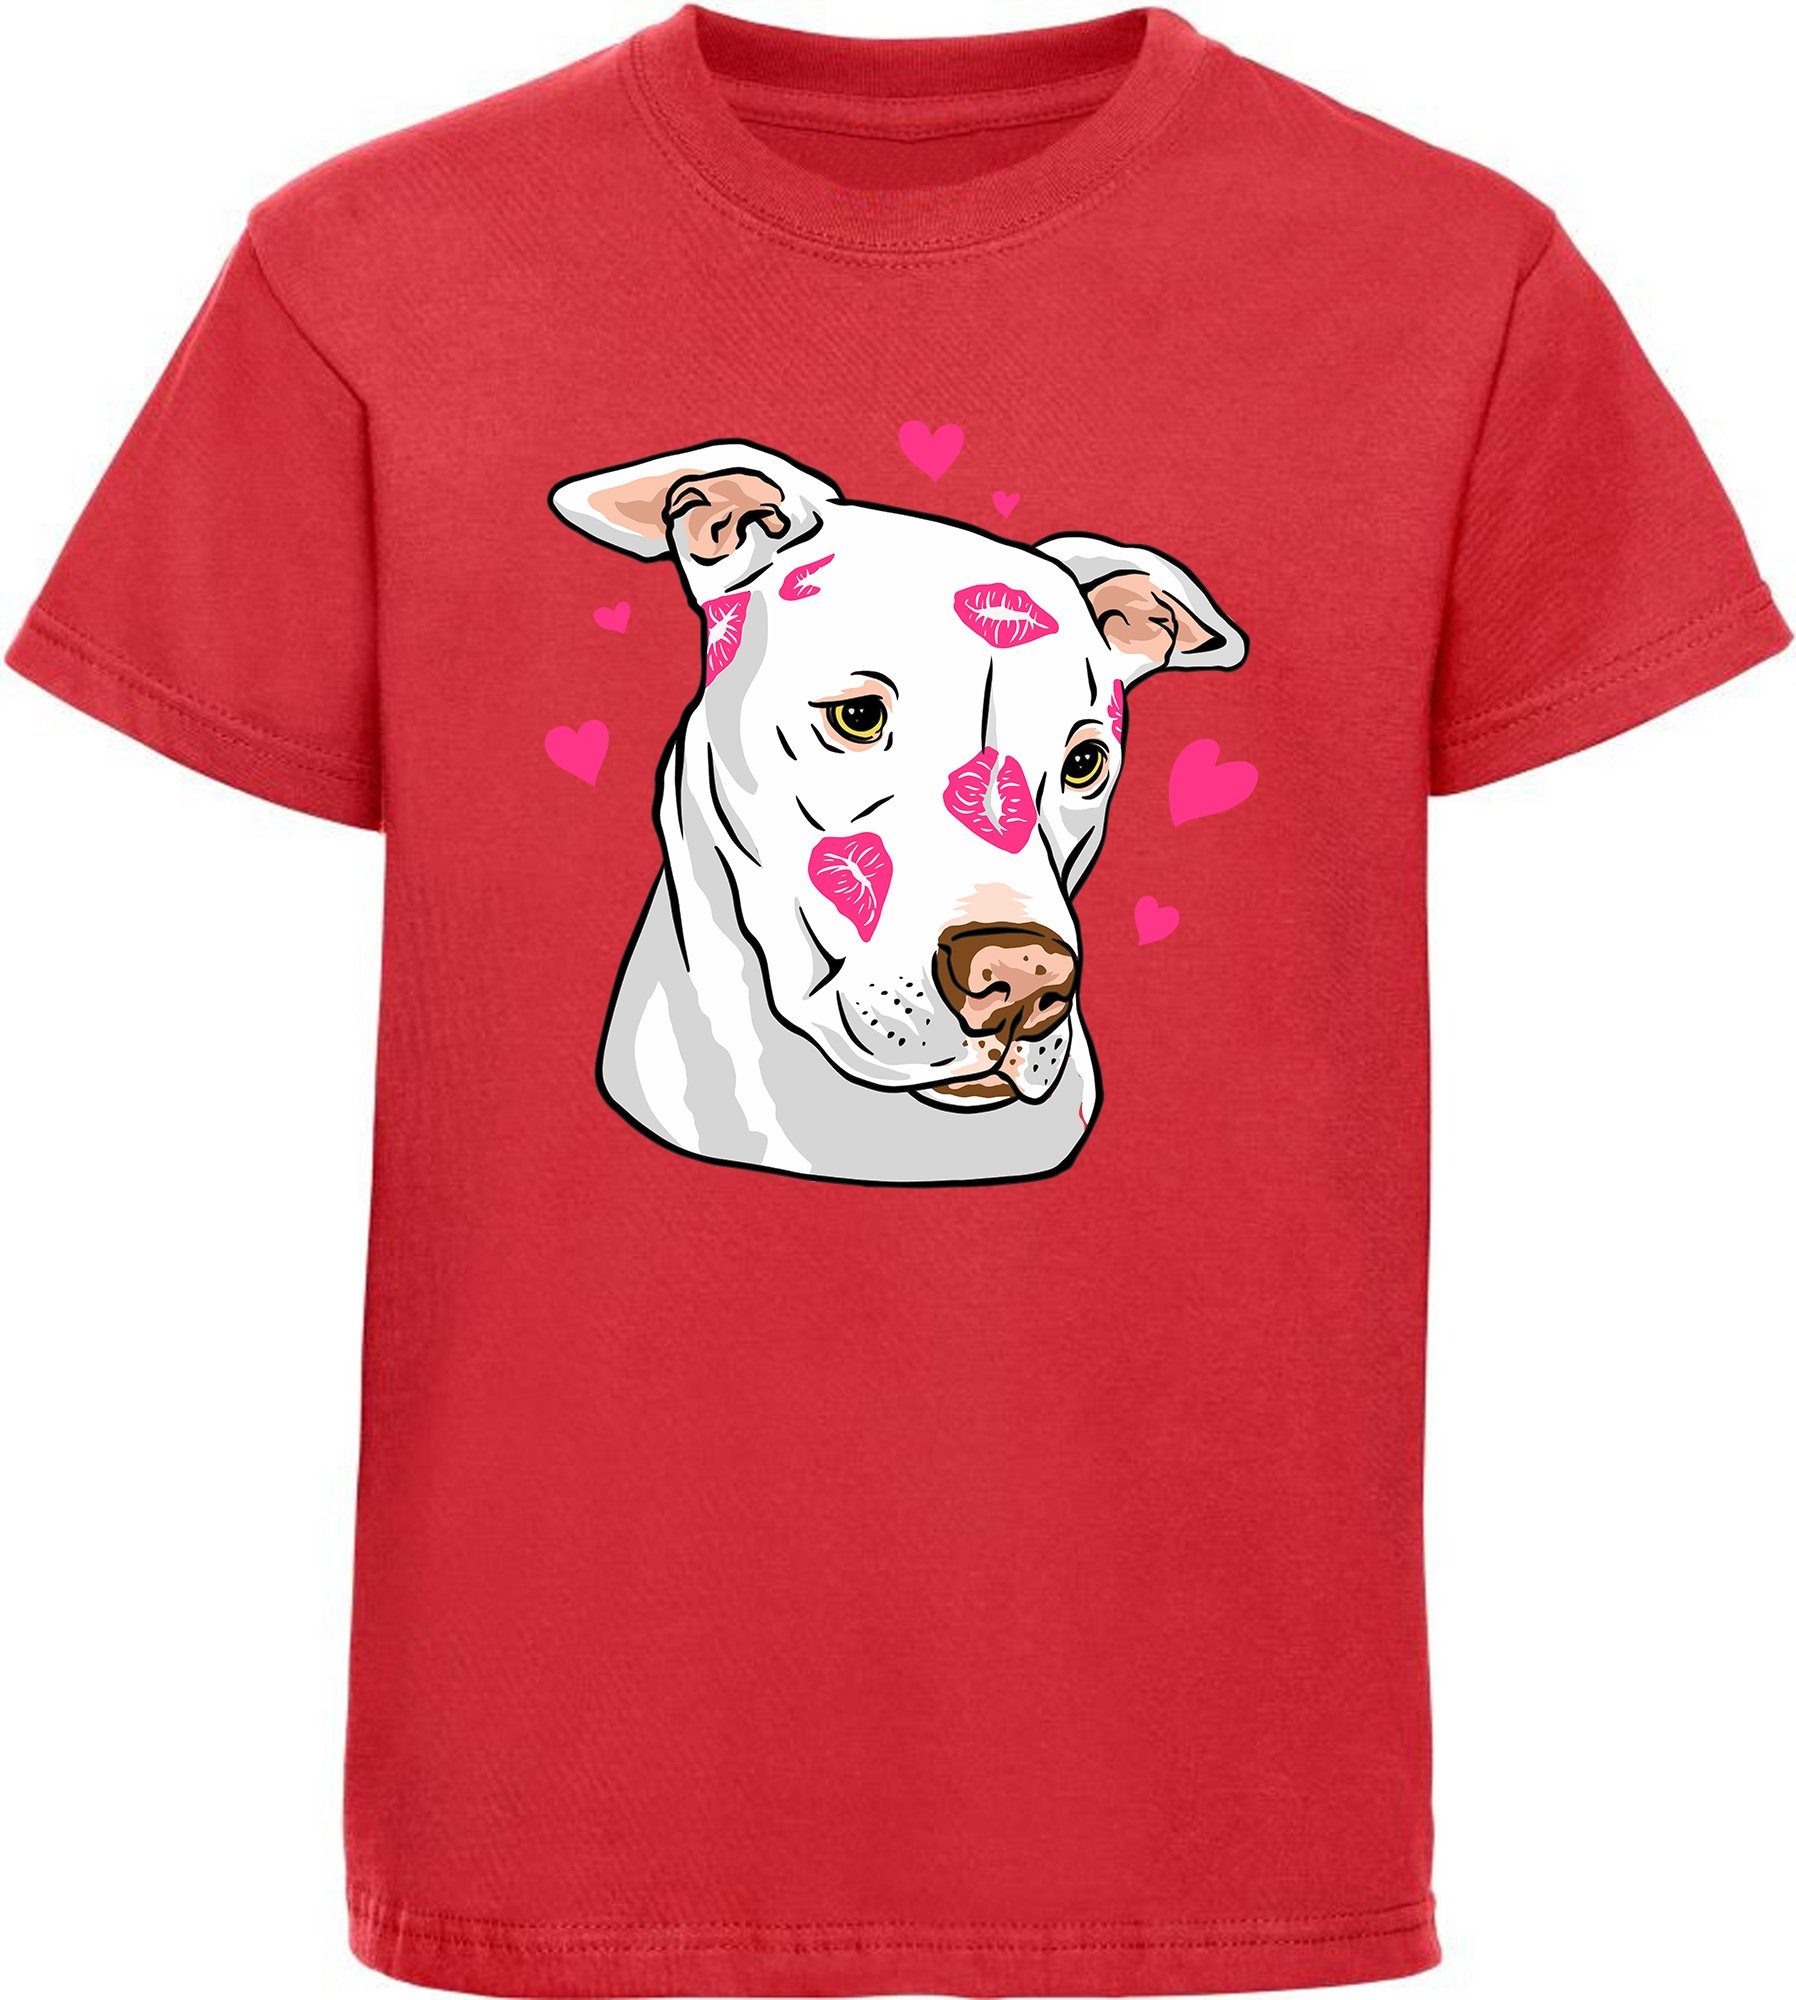 MyDesign24 Print-Shirt bedrucktes Kinder Hunde T-Shirt - Pitbull mit Herzen Baumwollshirt mit Aufdruck, i229 rot